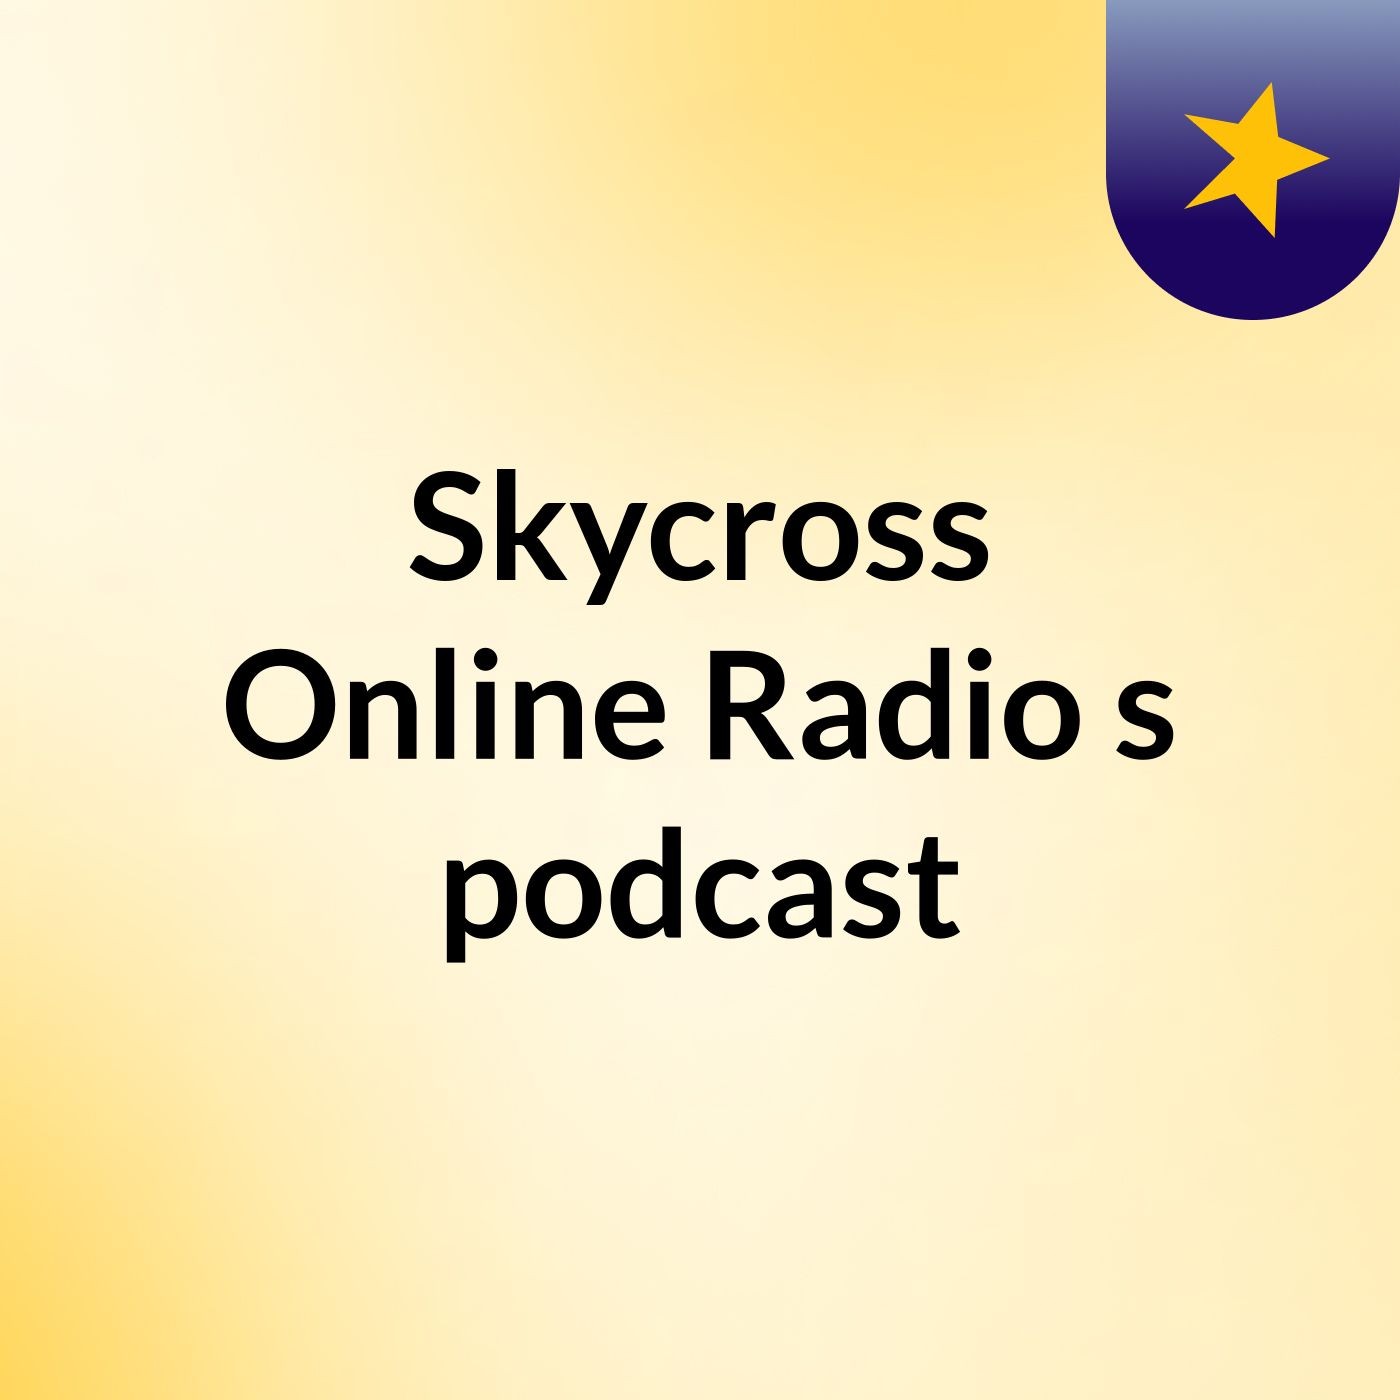 Skycross Online Radio's podcast